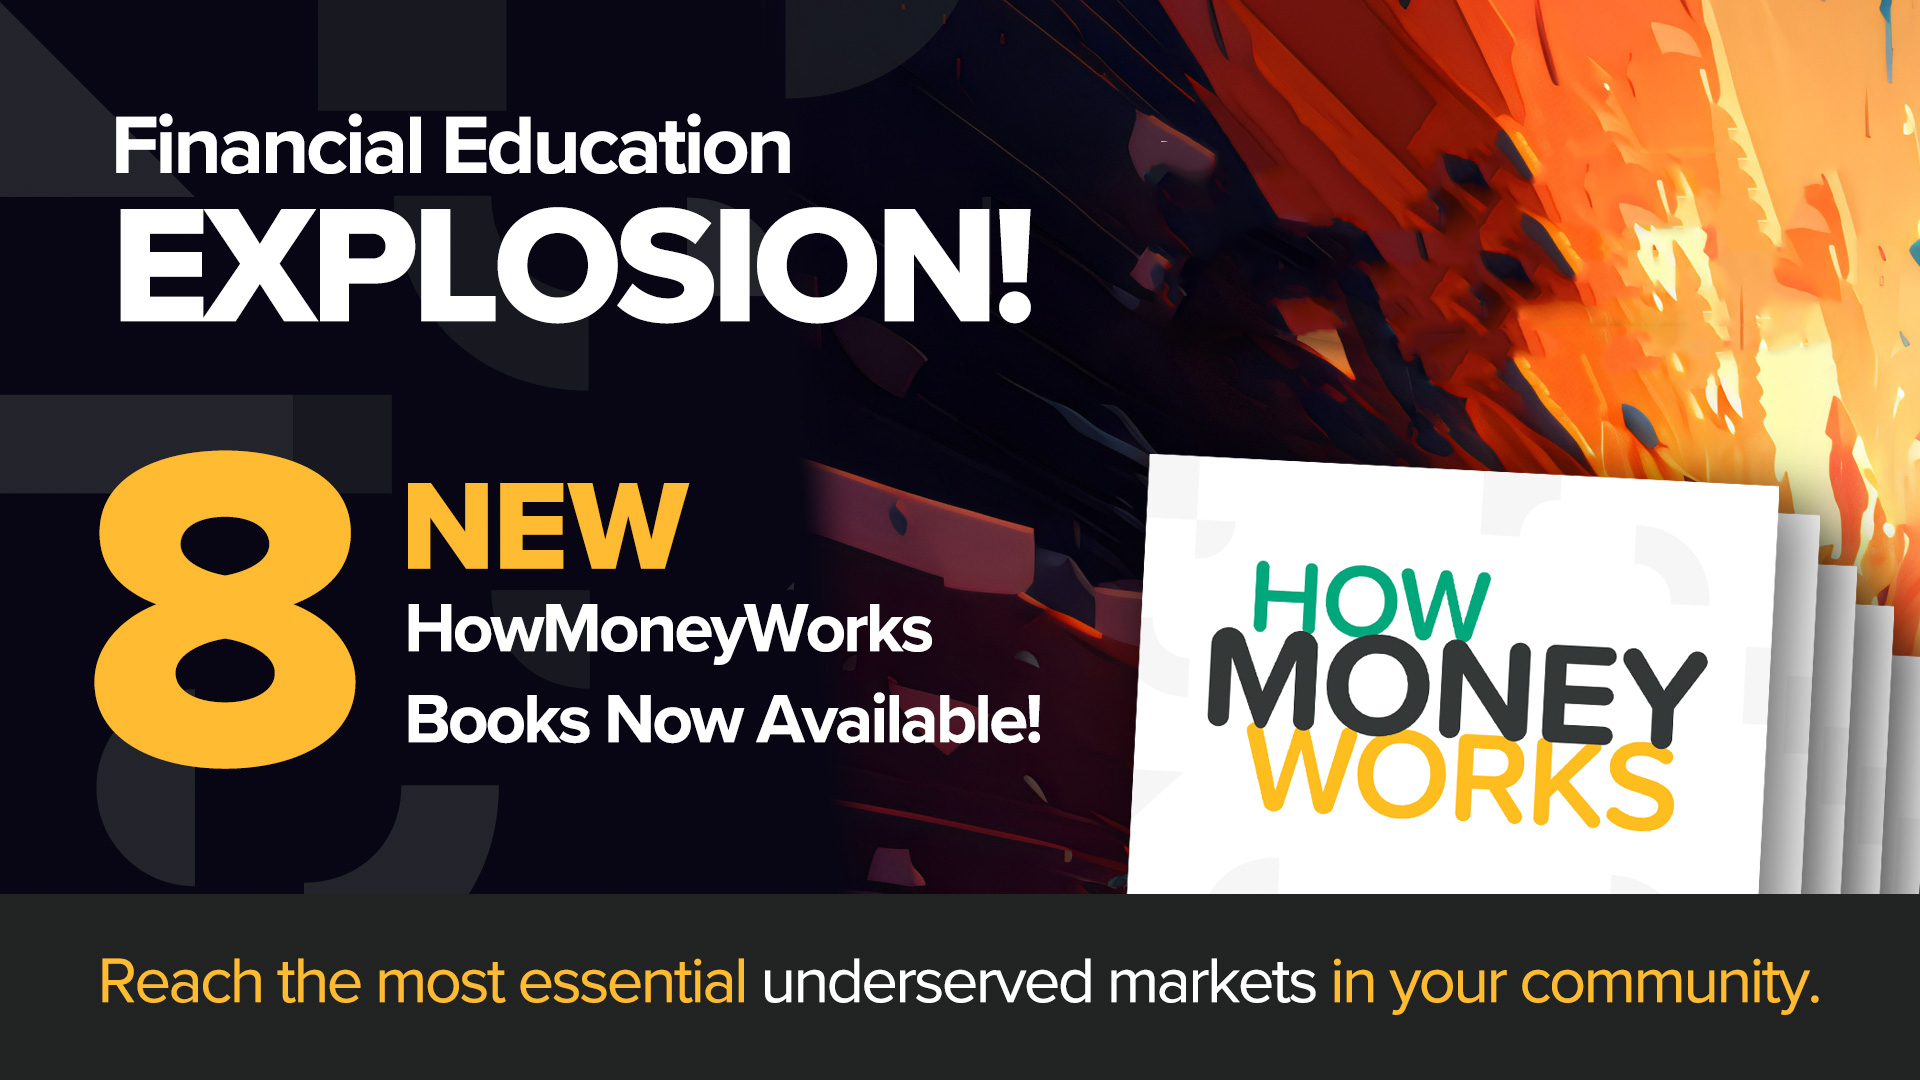 HowMoneyWorks 的 8 本新书--今天，我们推出一系列新的多元化金融知识书籍